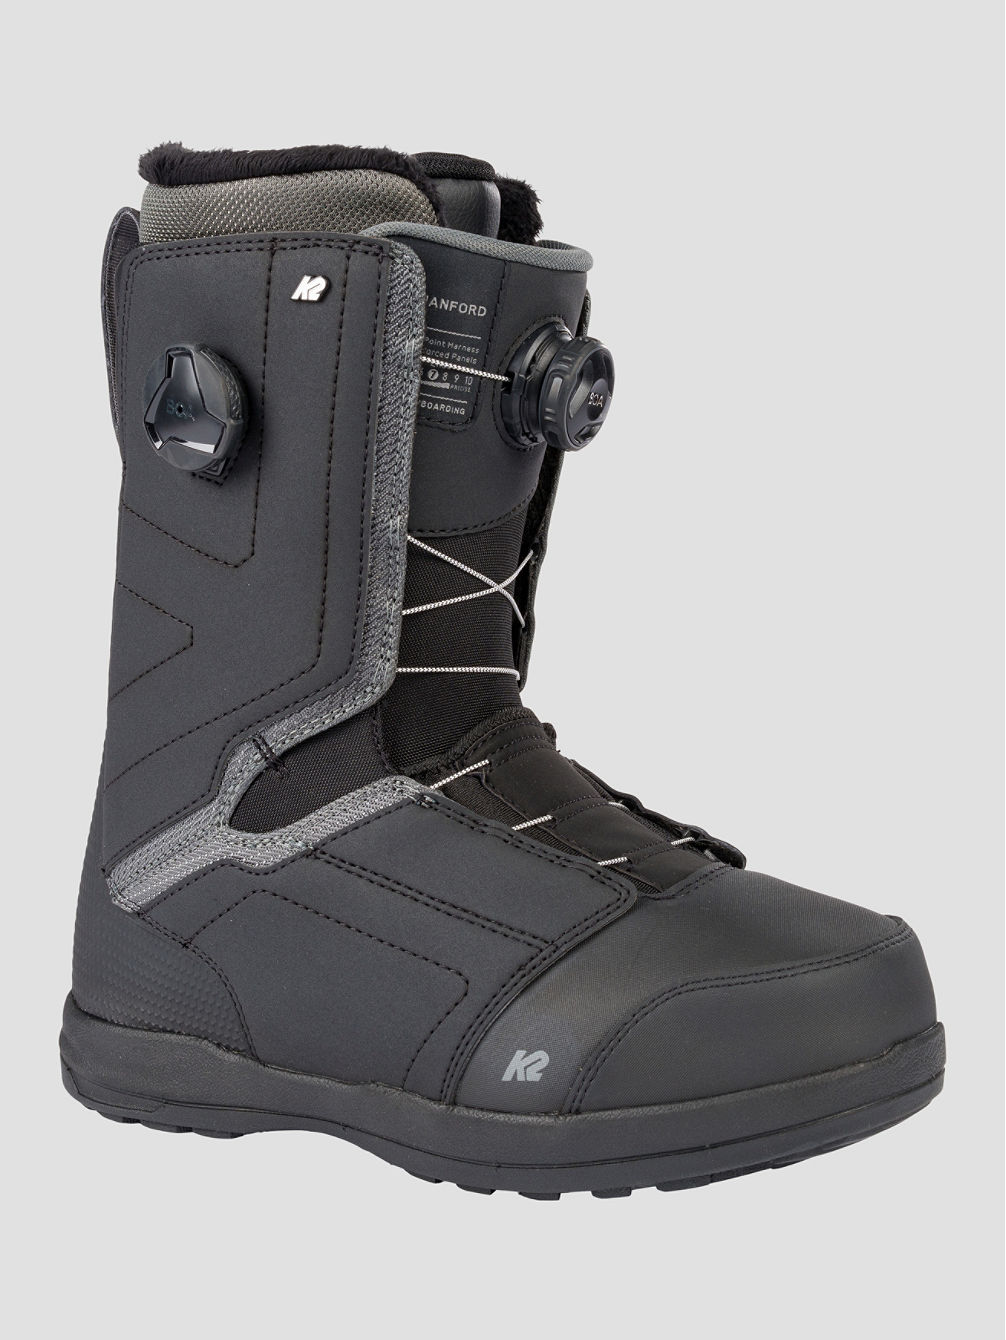 Hanford 2023 Snowboard Boots